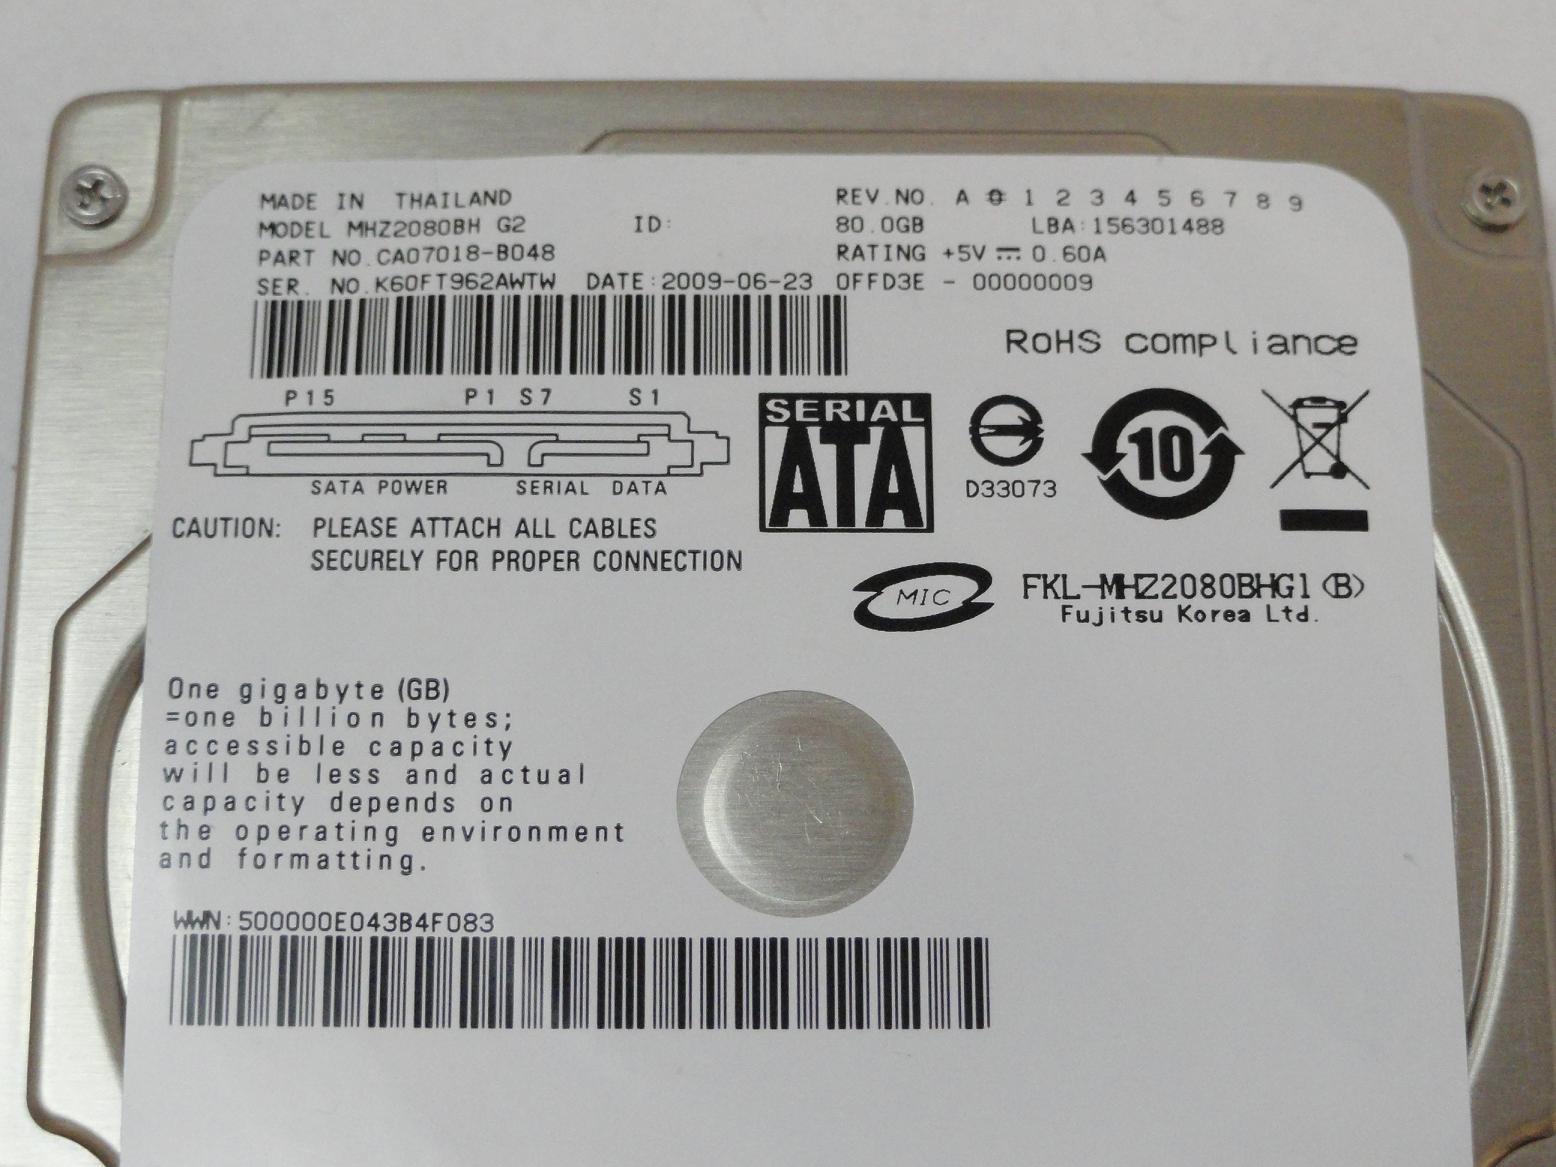 PR06186_CA07018-B048_Fujitsu 80GB SATA 5400rpm 2.5in HDD - Image3